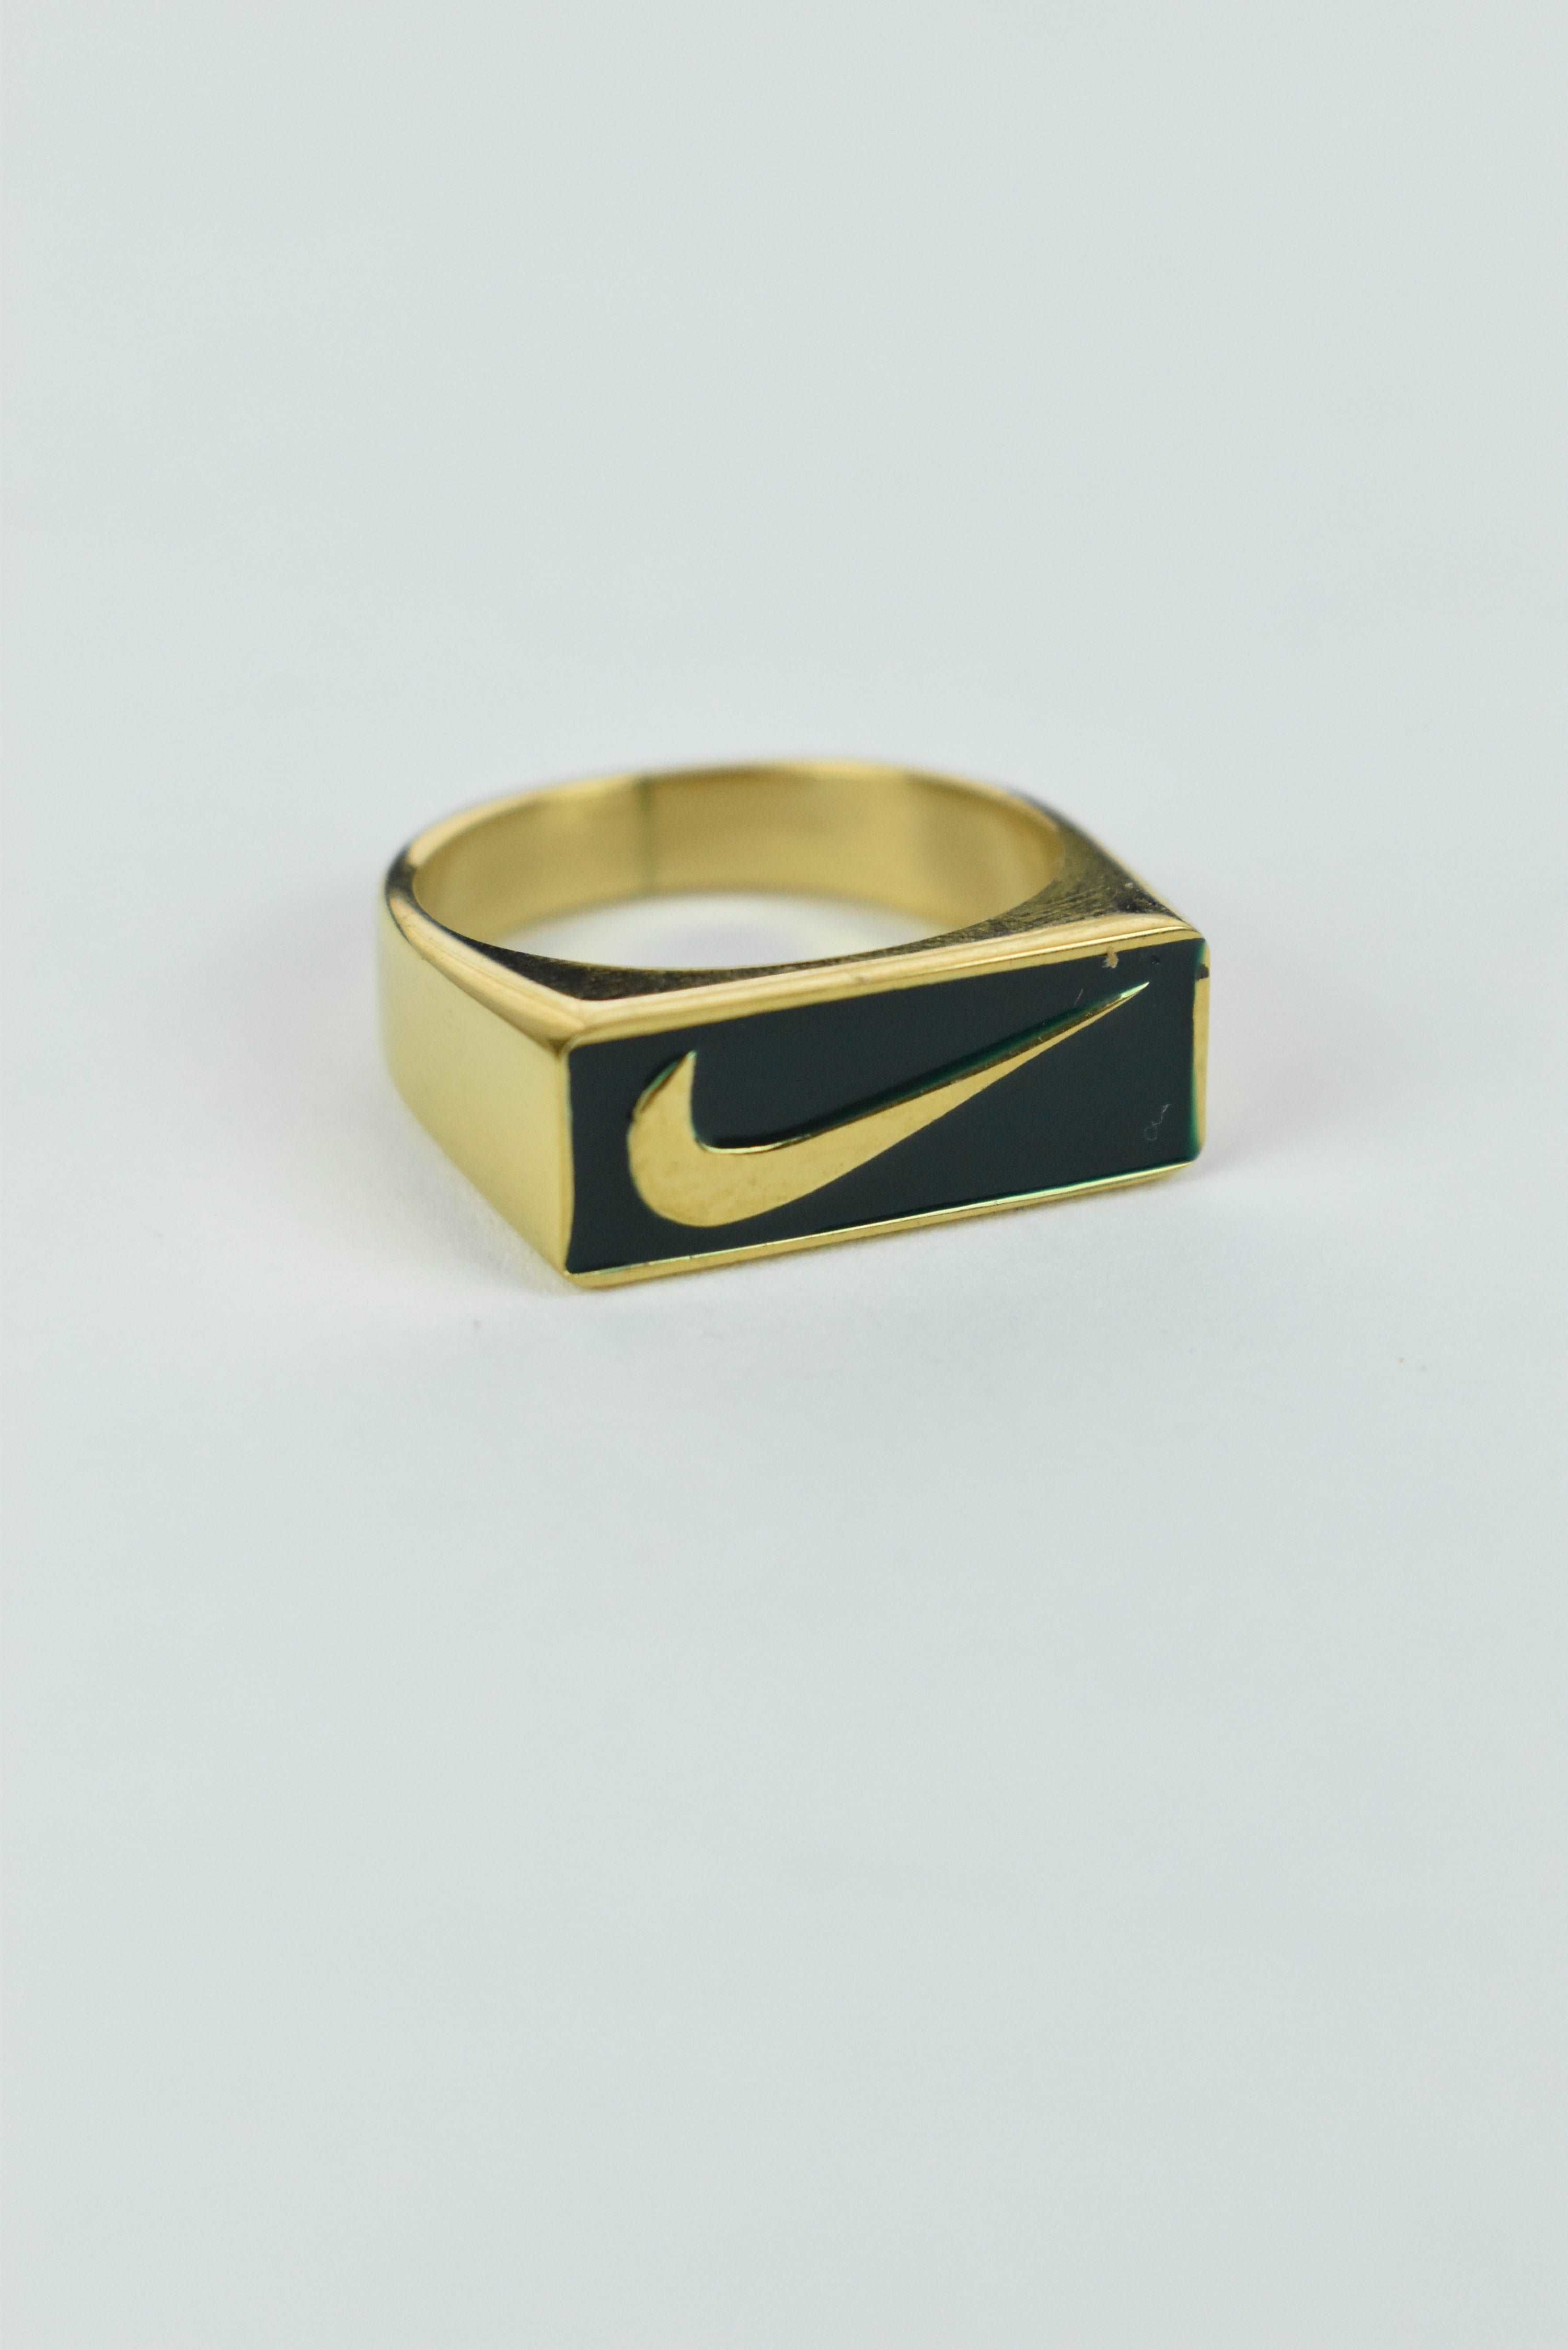 Nike Swoosh Ring Bootleg Silver/Gold